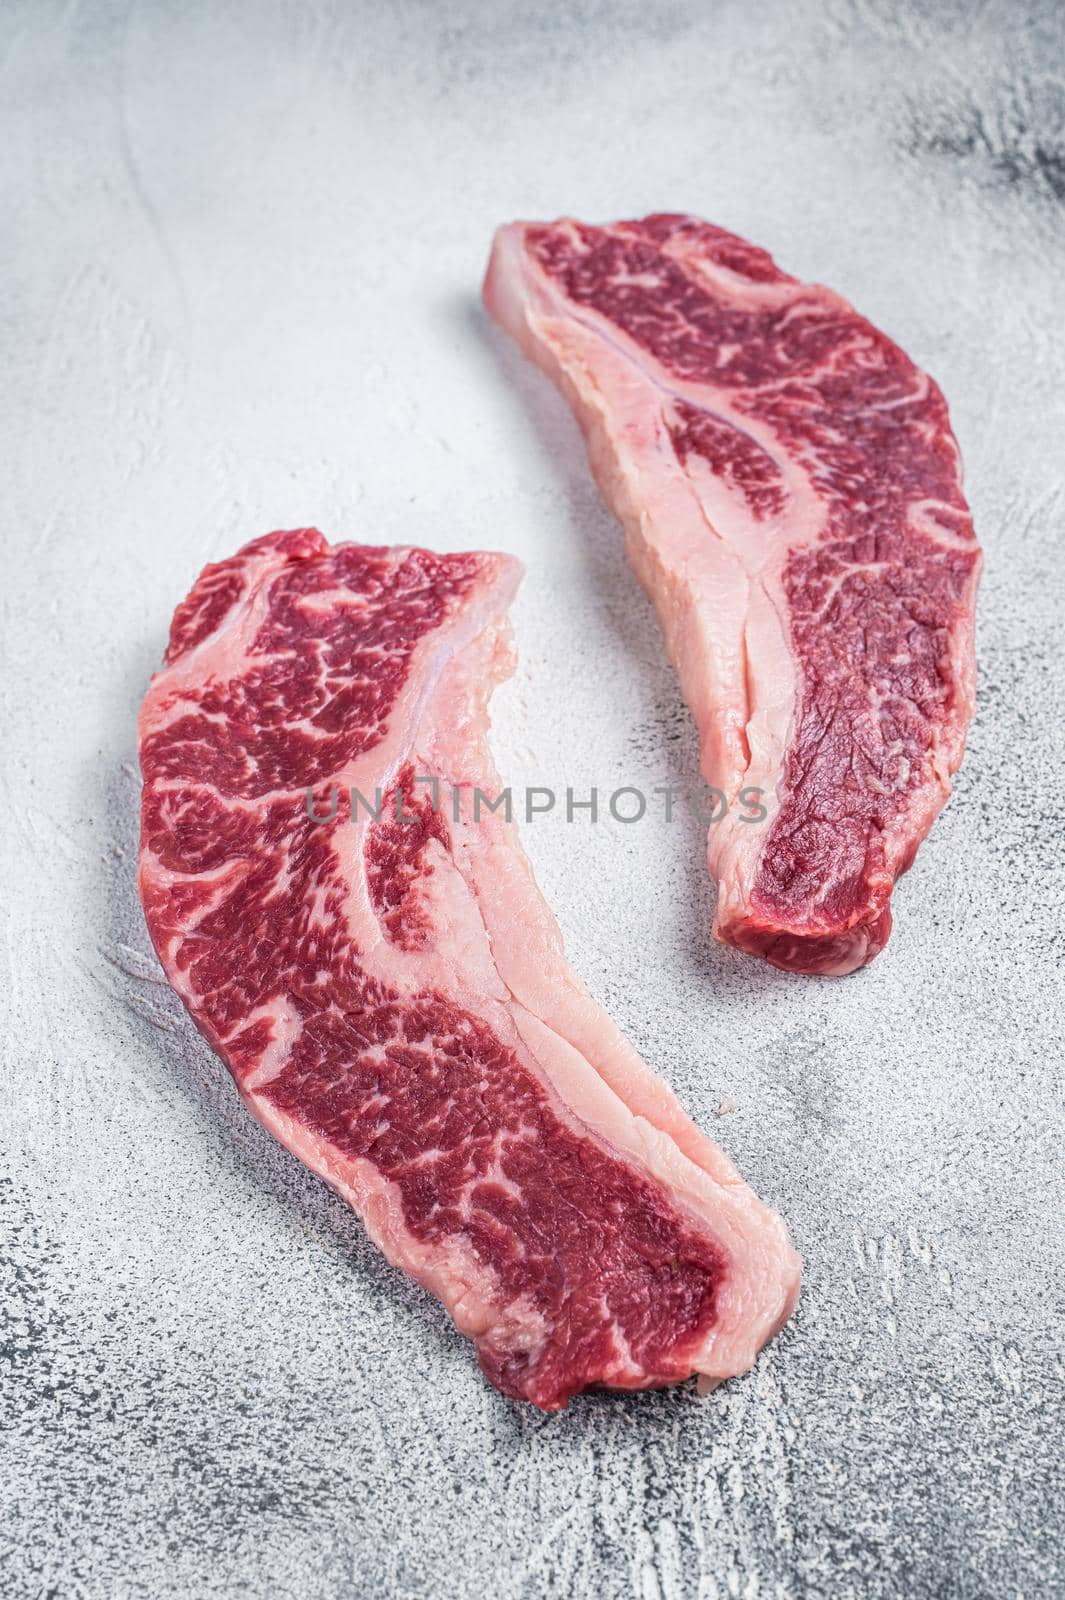 Striploin steak or New York steak, raw beef butchery meat cut. White background. Top view.